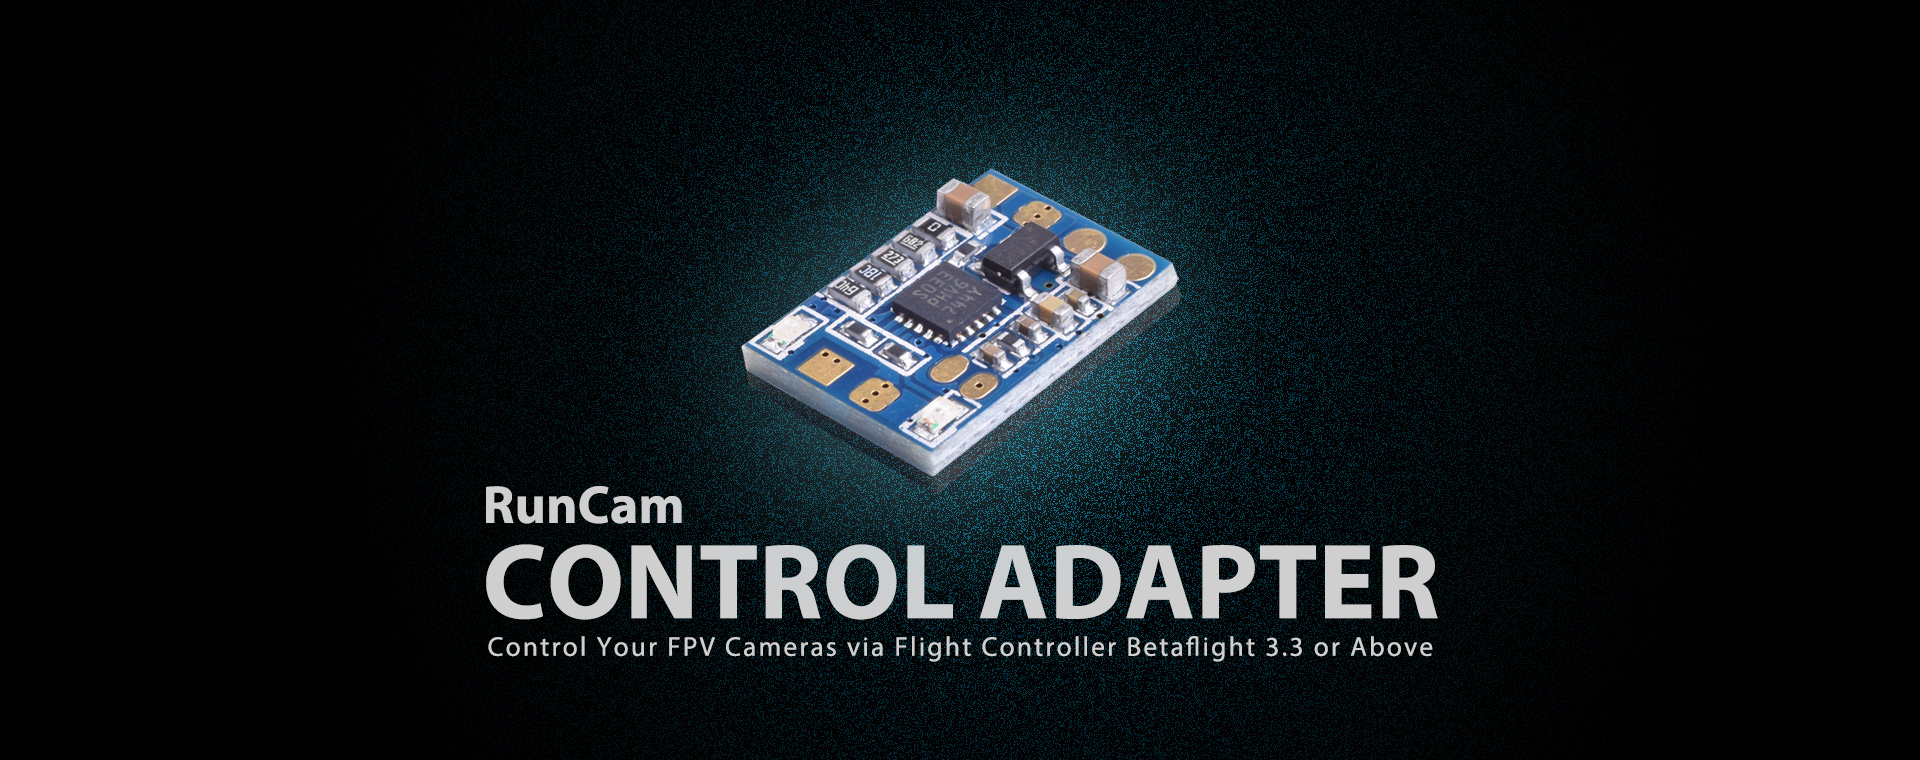 RunCam Control Adapter